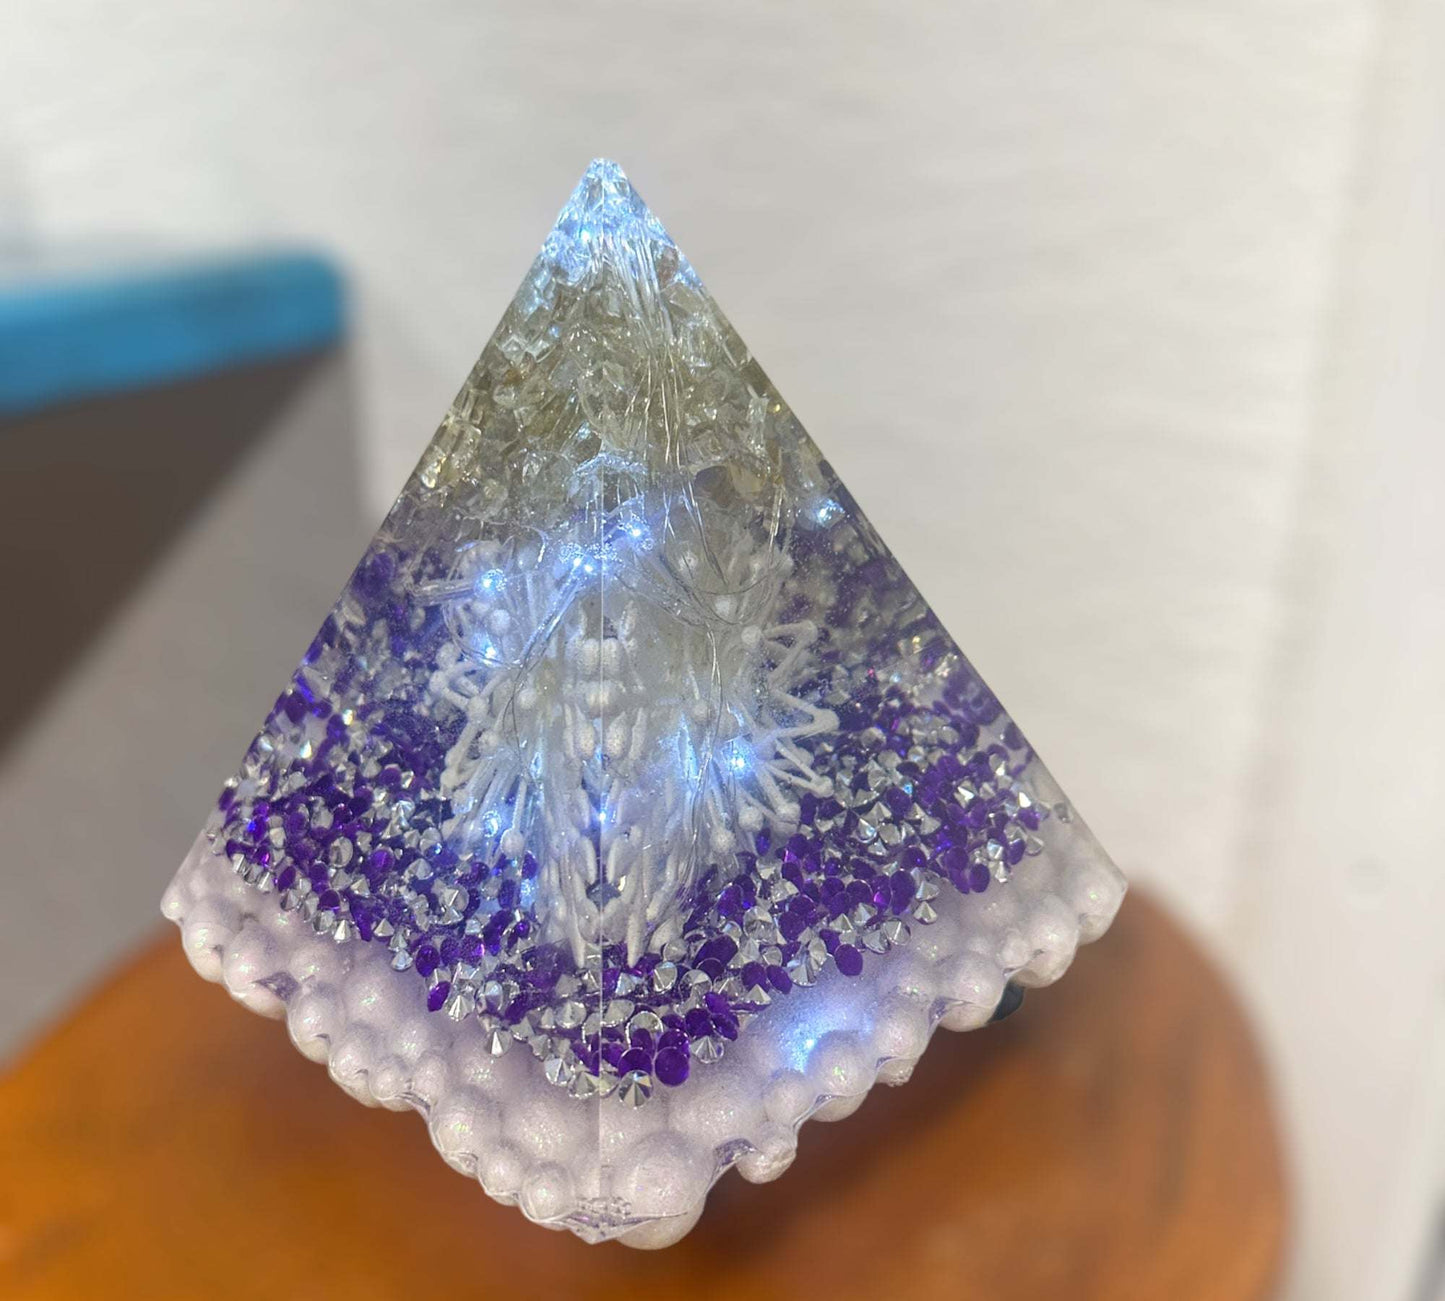 Snowflake Splendor Illuminated Resin Pyramid with Purple Diamonds